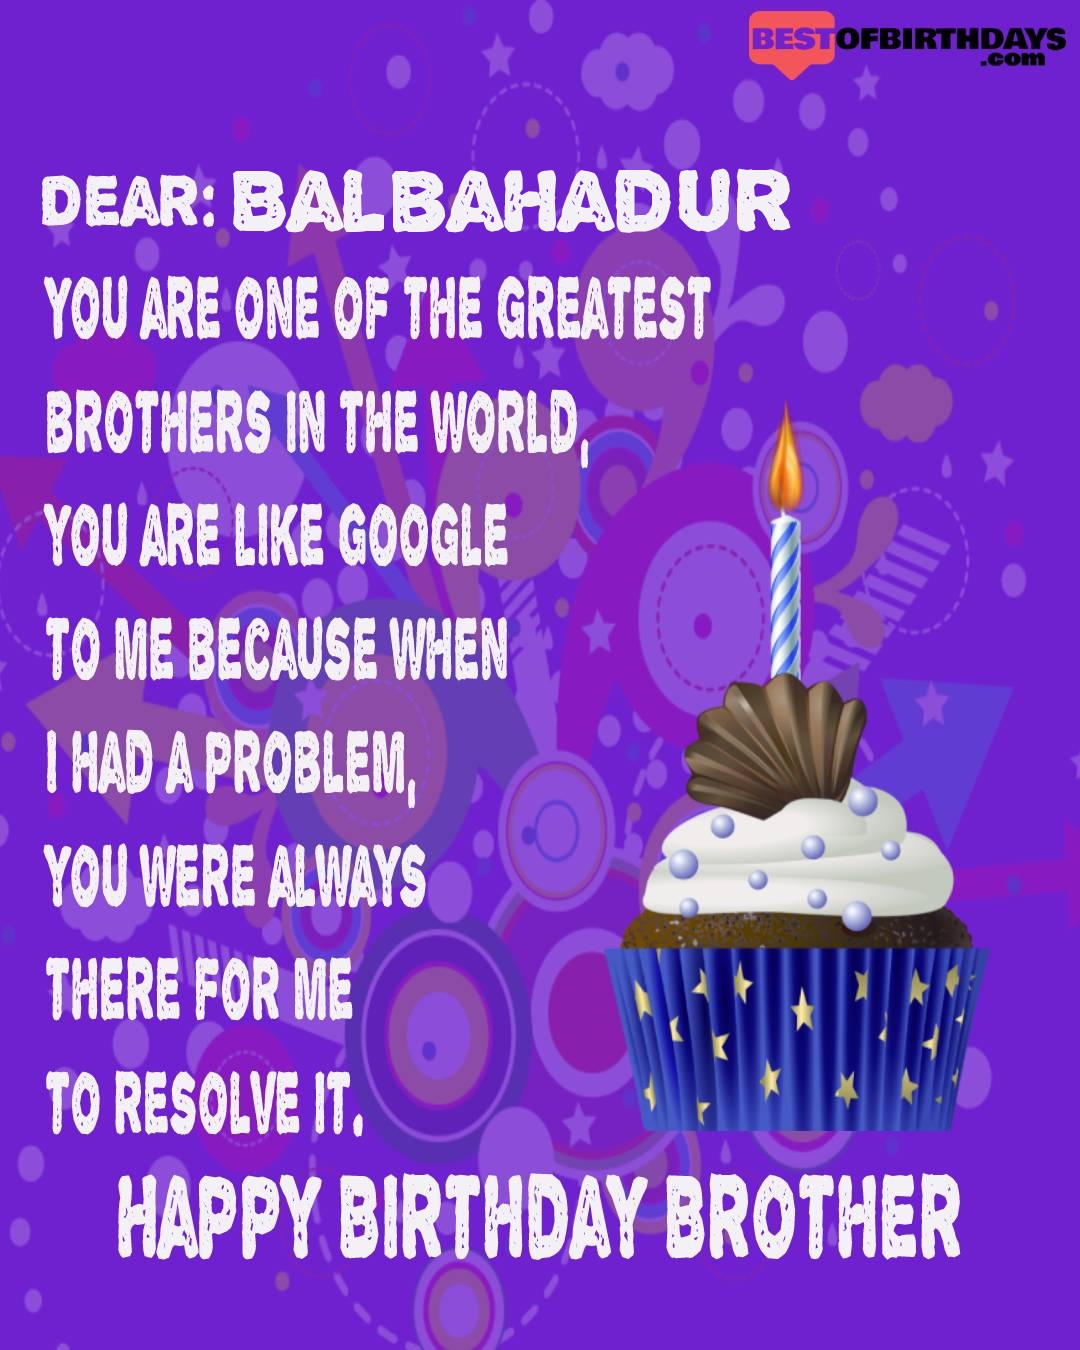 Happy birthday balbahadur bhai brother bro